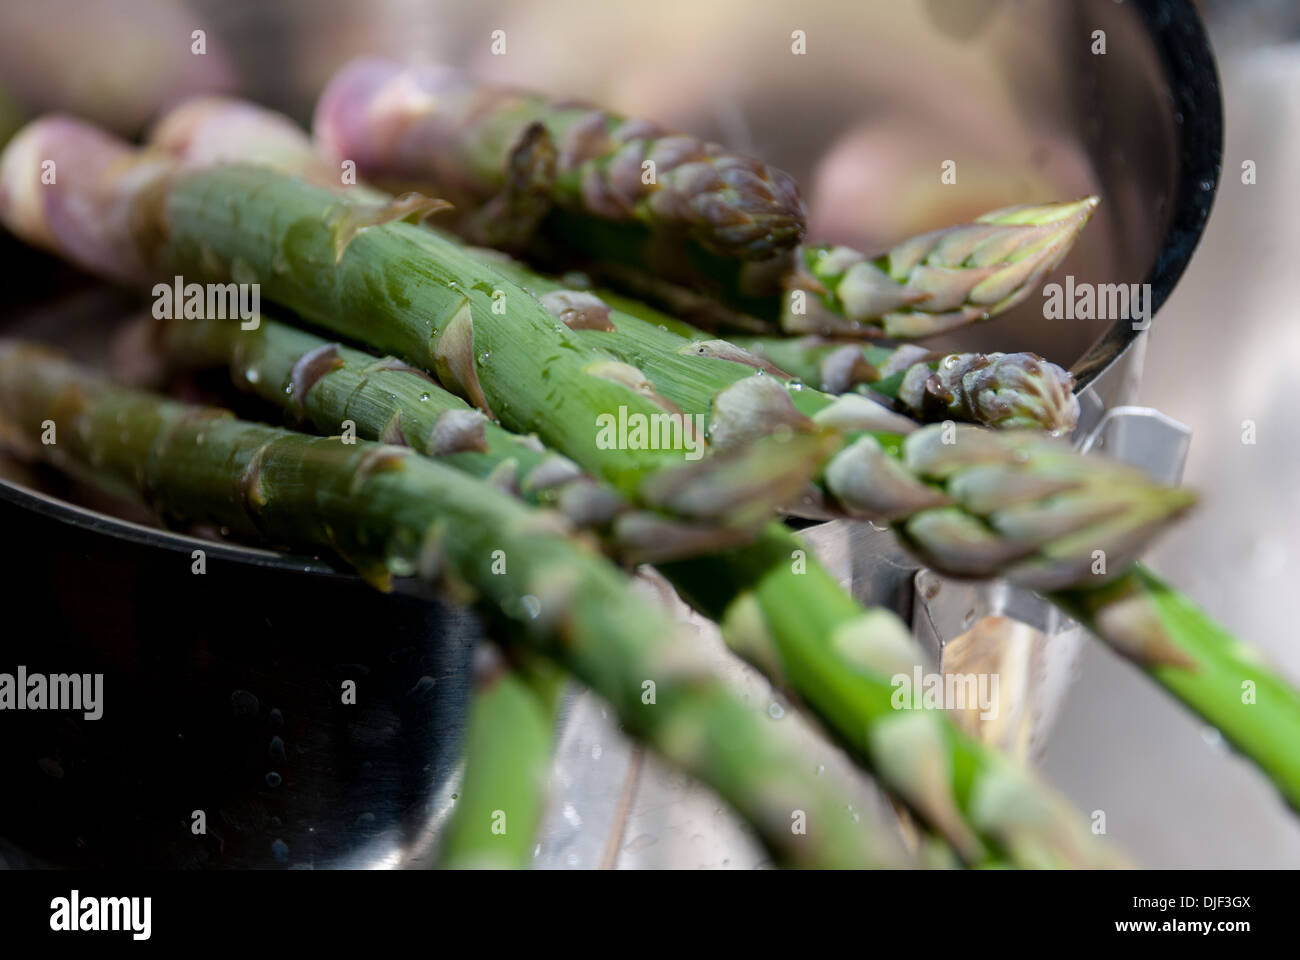 Asparagus in a kettle Stock Photo